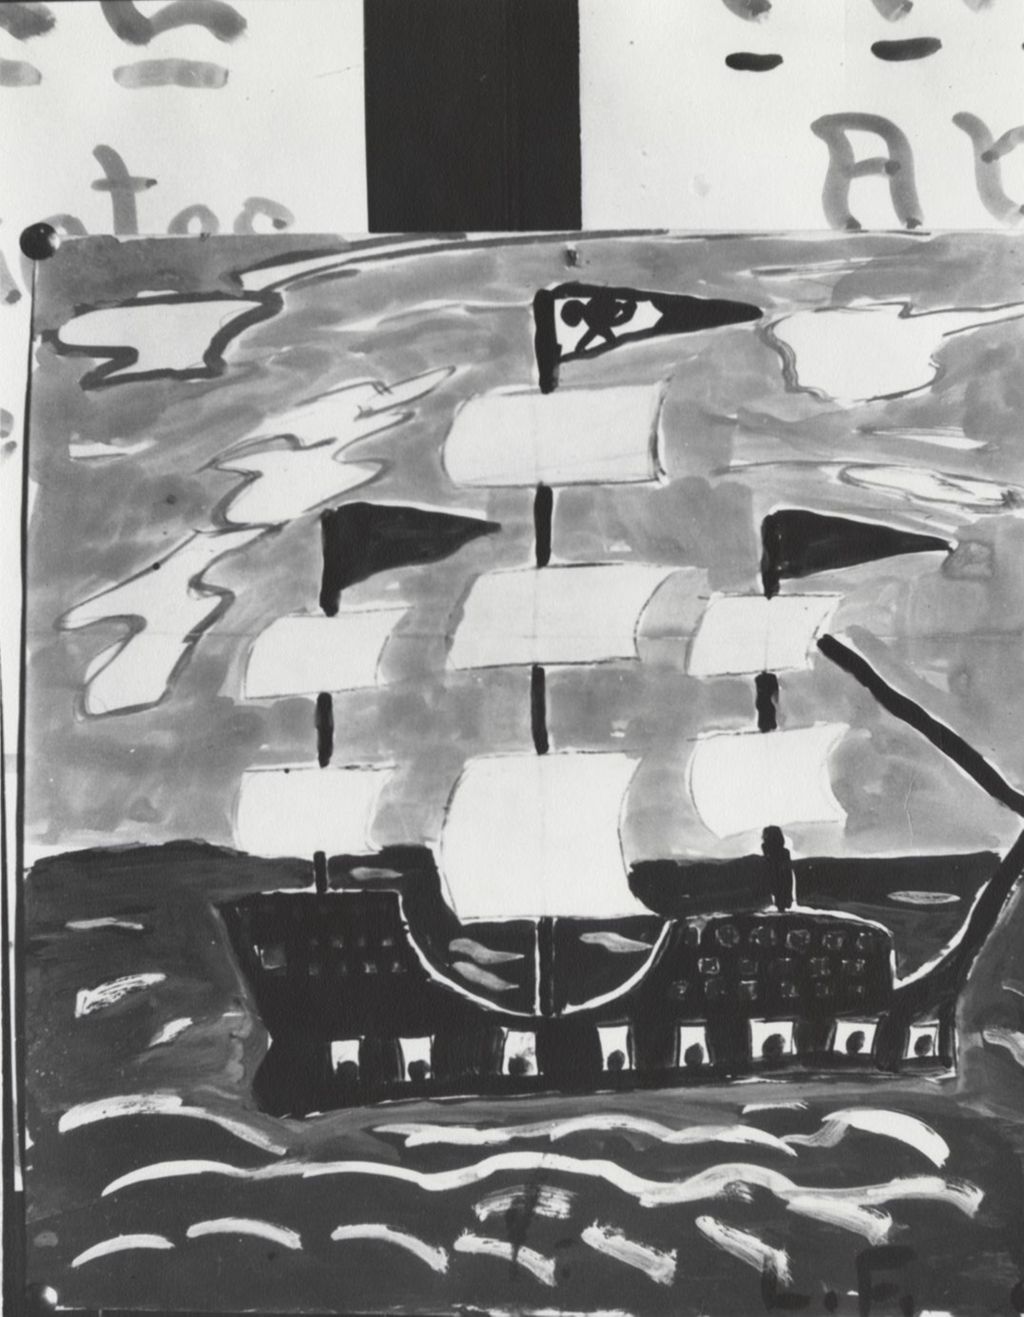 Miniature of Child's artwork "The Ship"